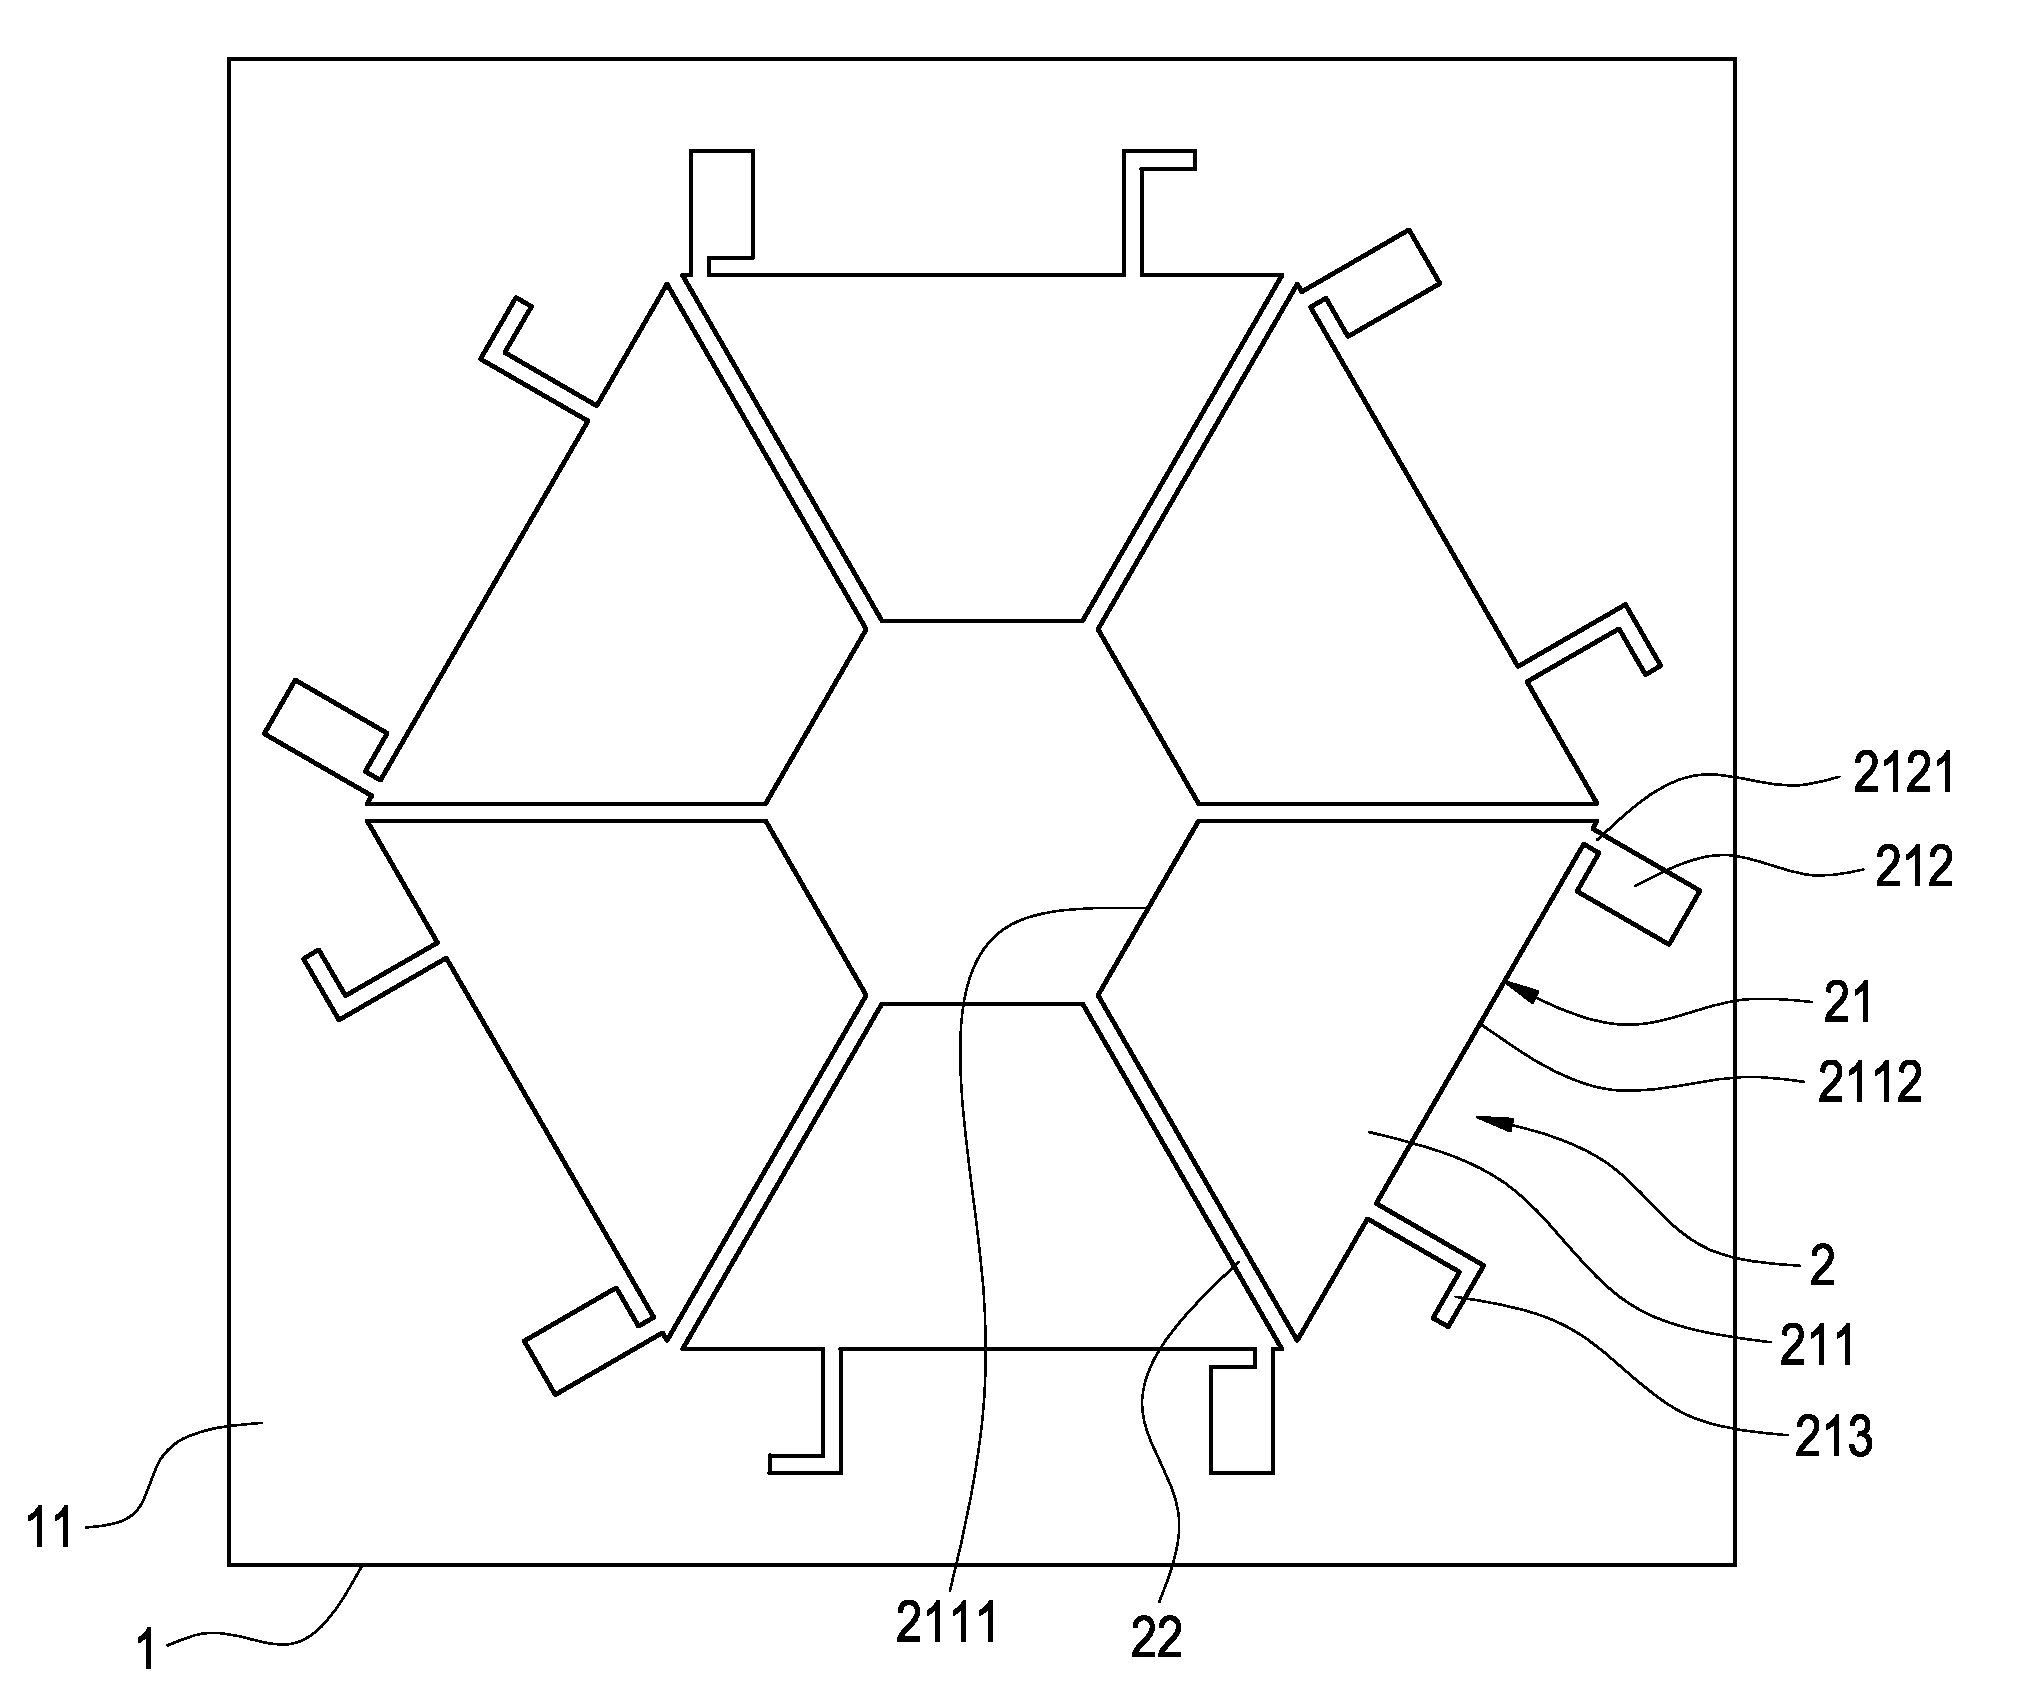 Planar array antenna structure